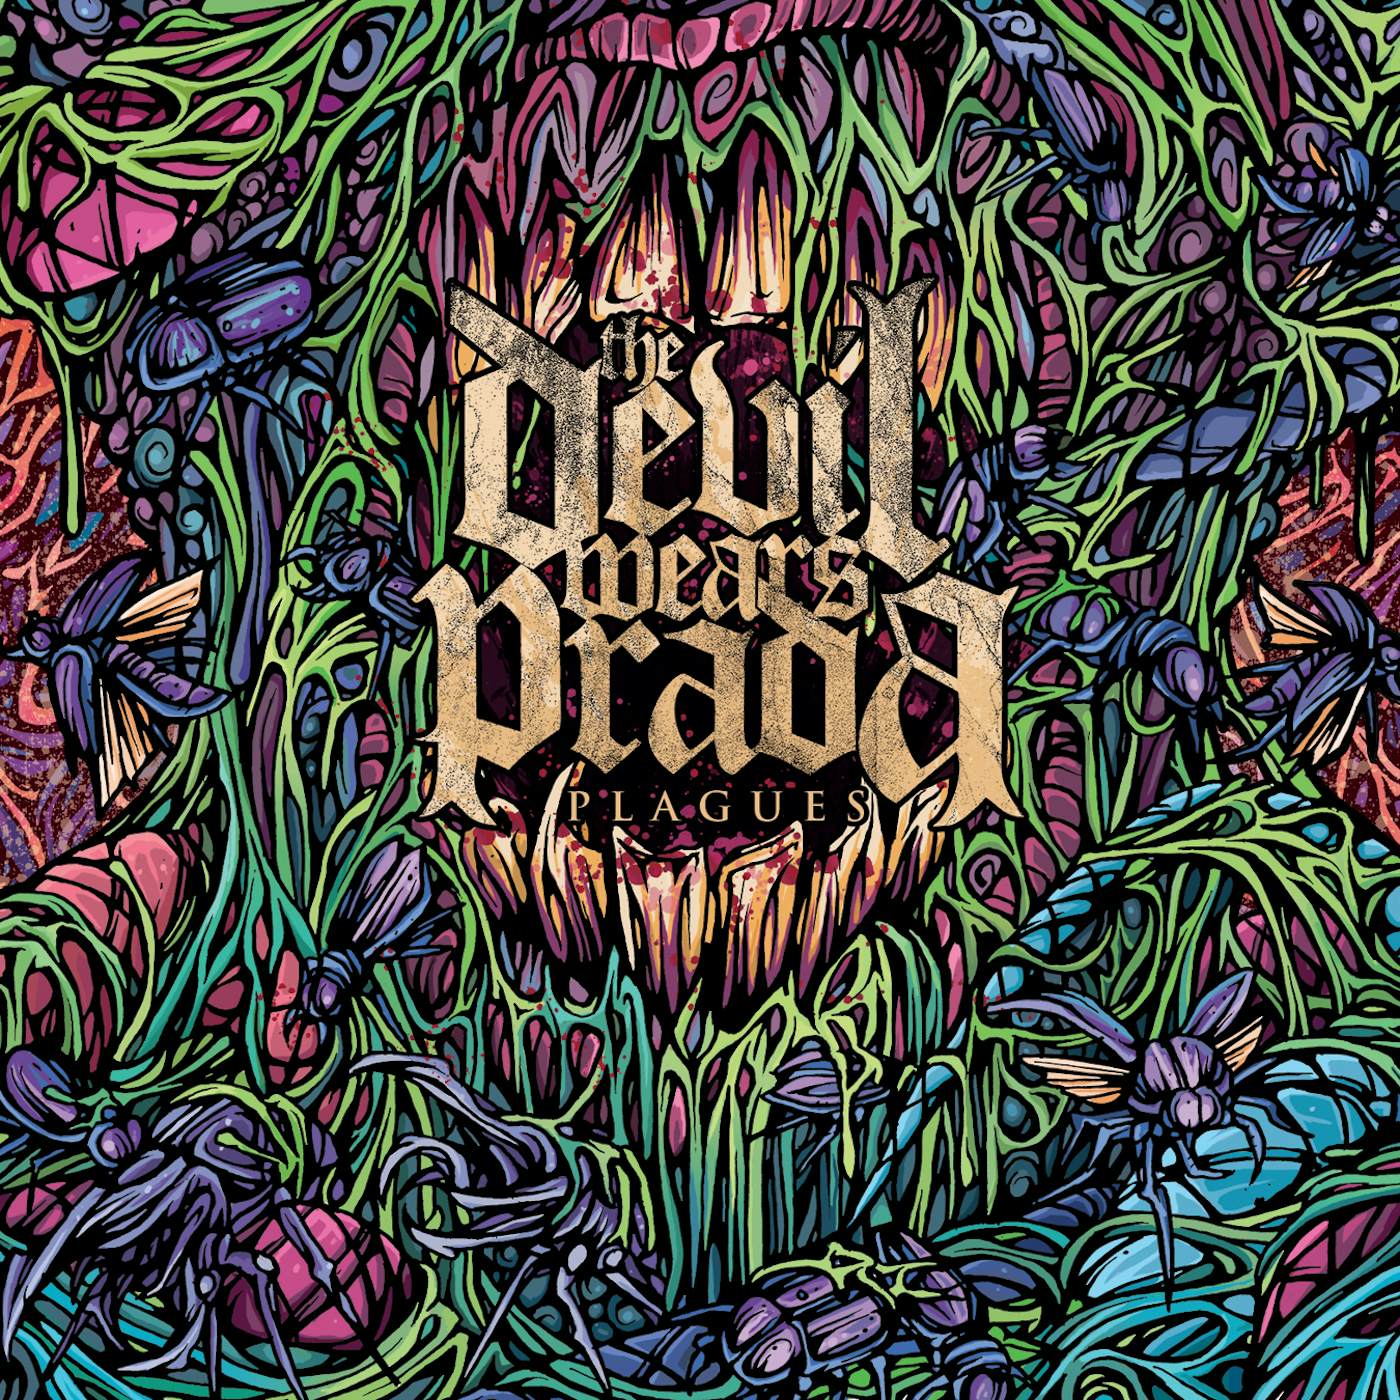 The Devil Wears Prada PLAGUES CD